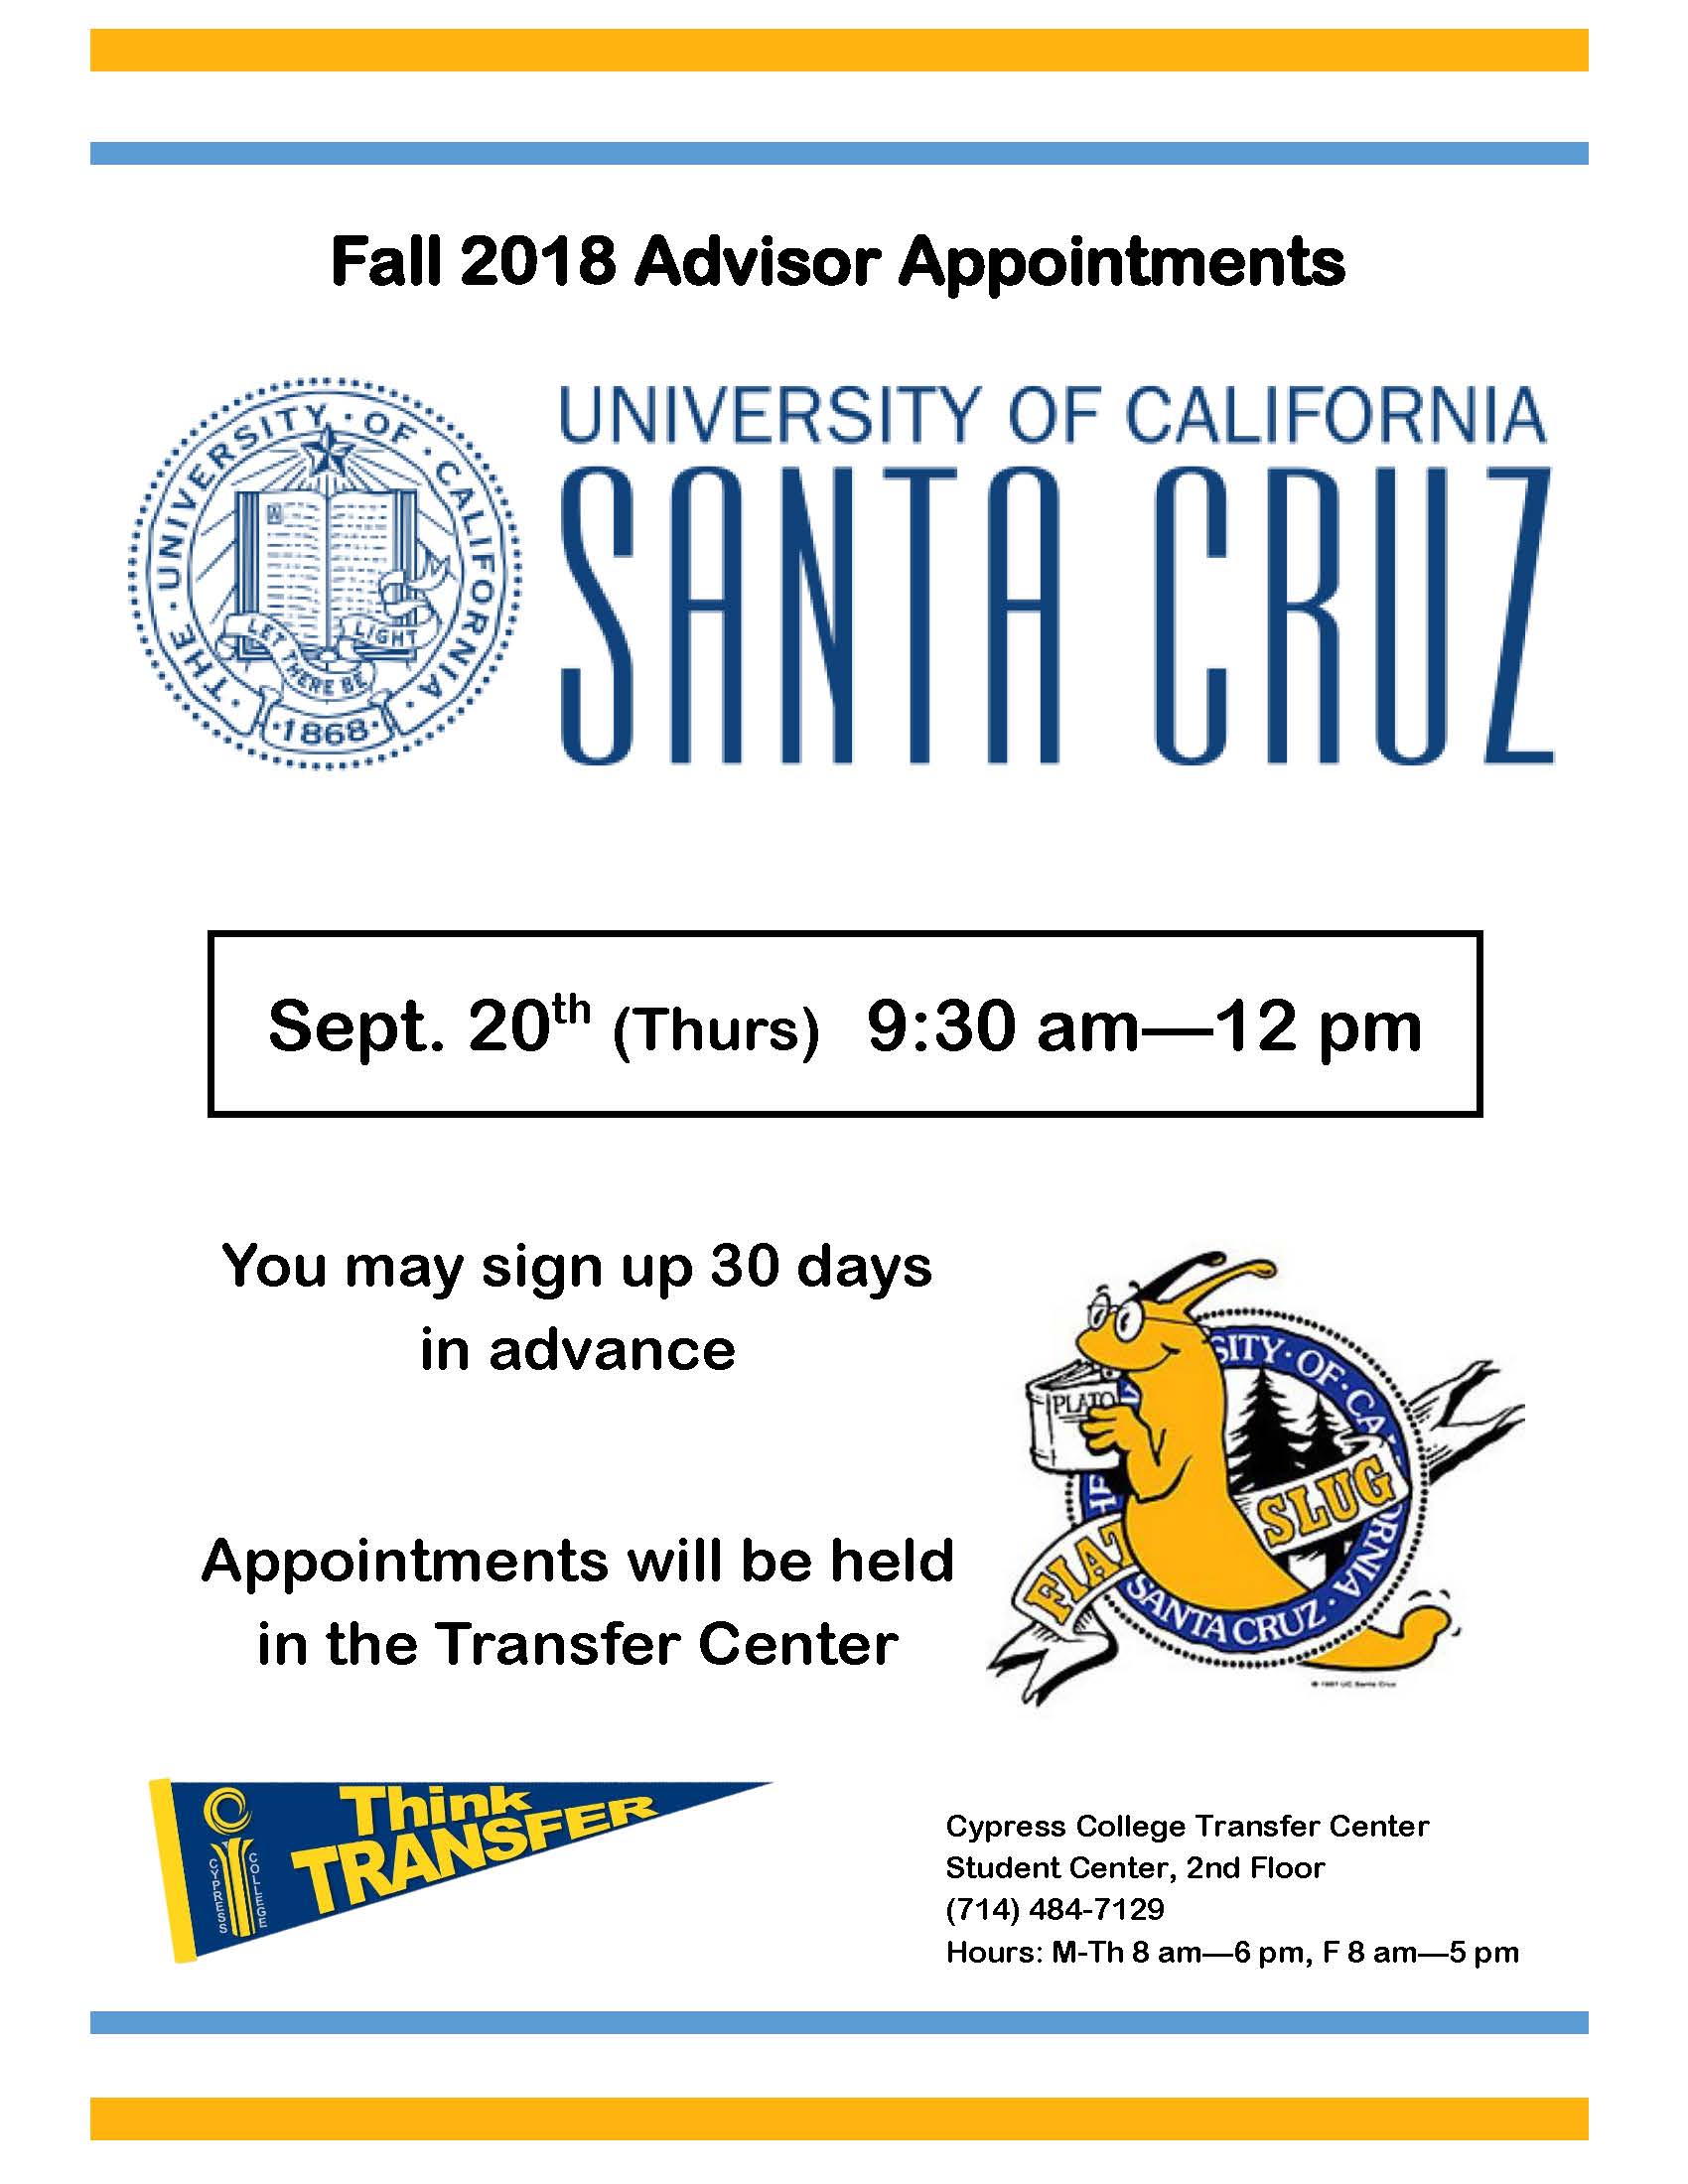 Fall 2018 Advisor Appointments University of Santa Cruz flyer.